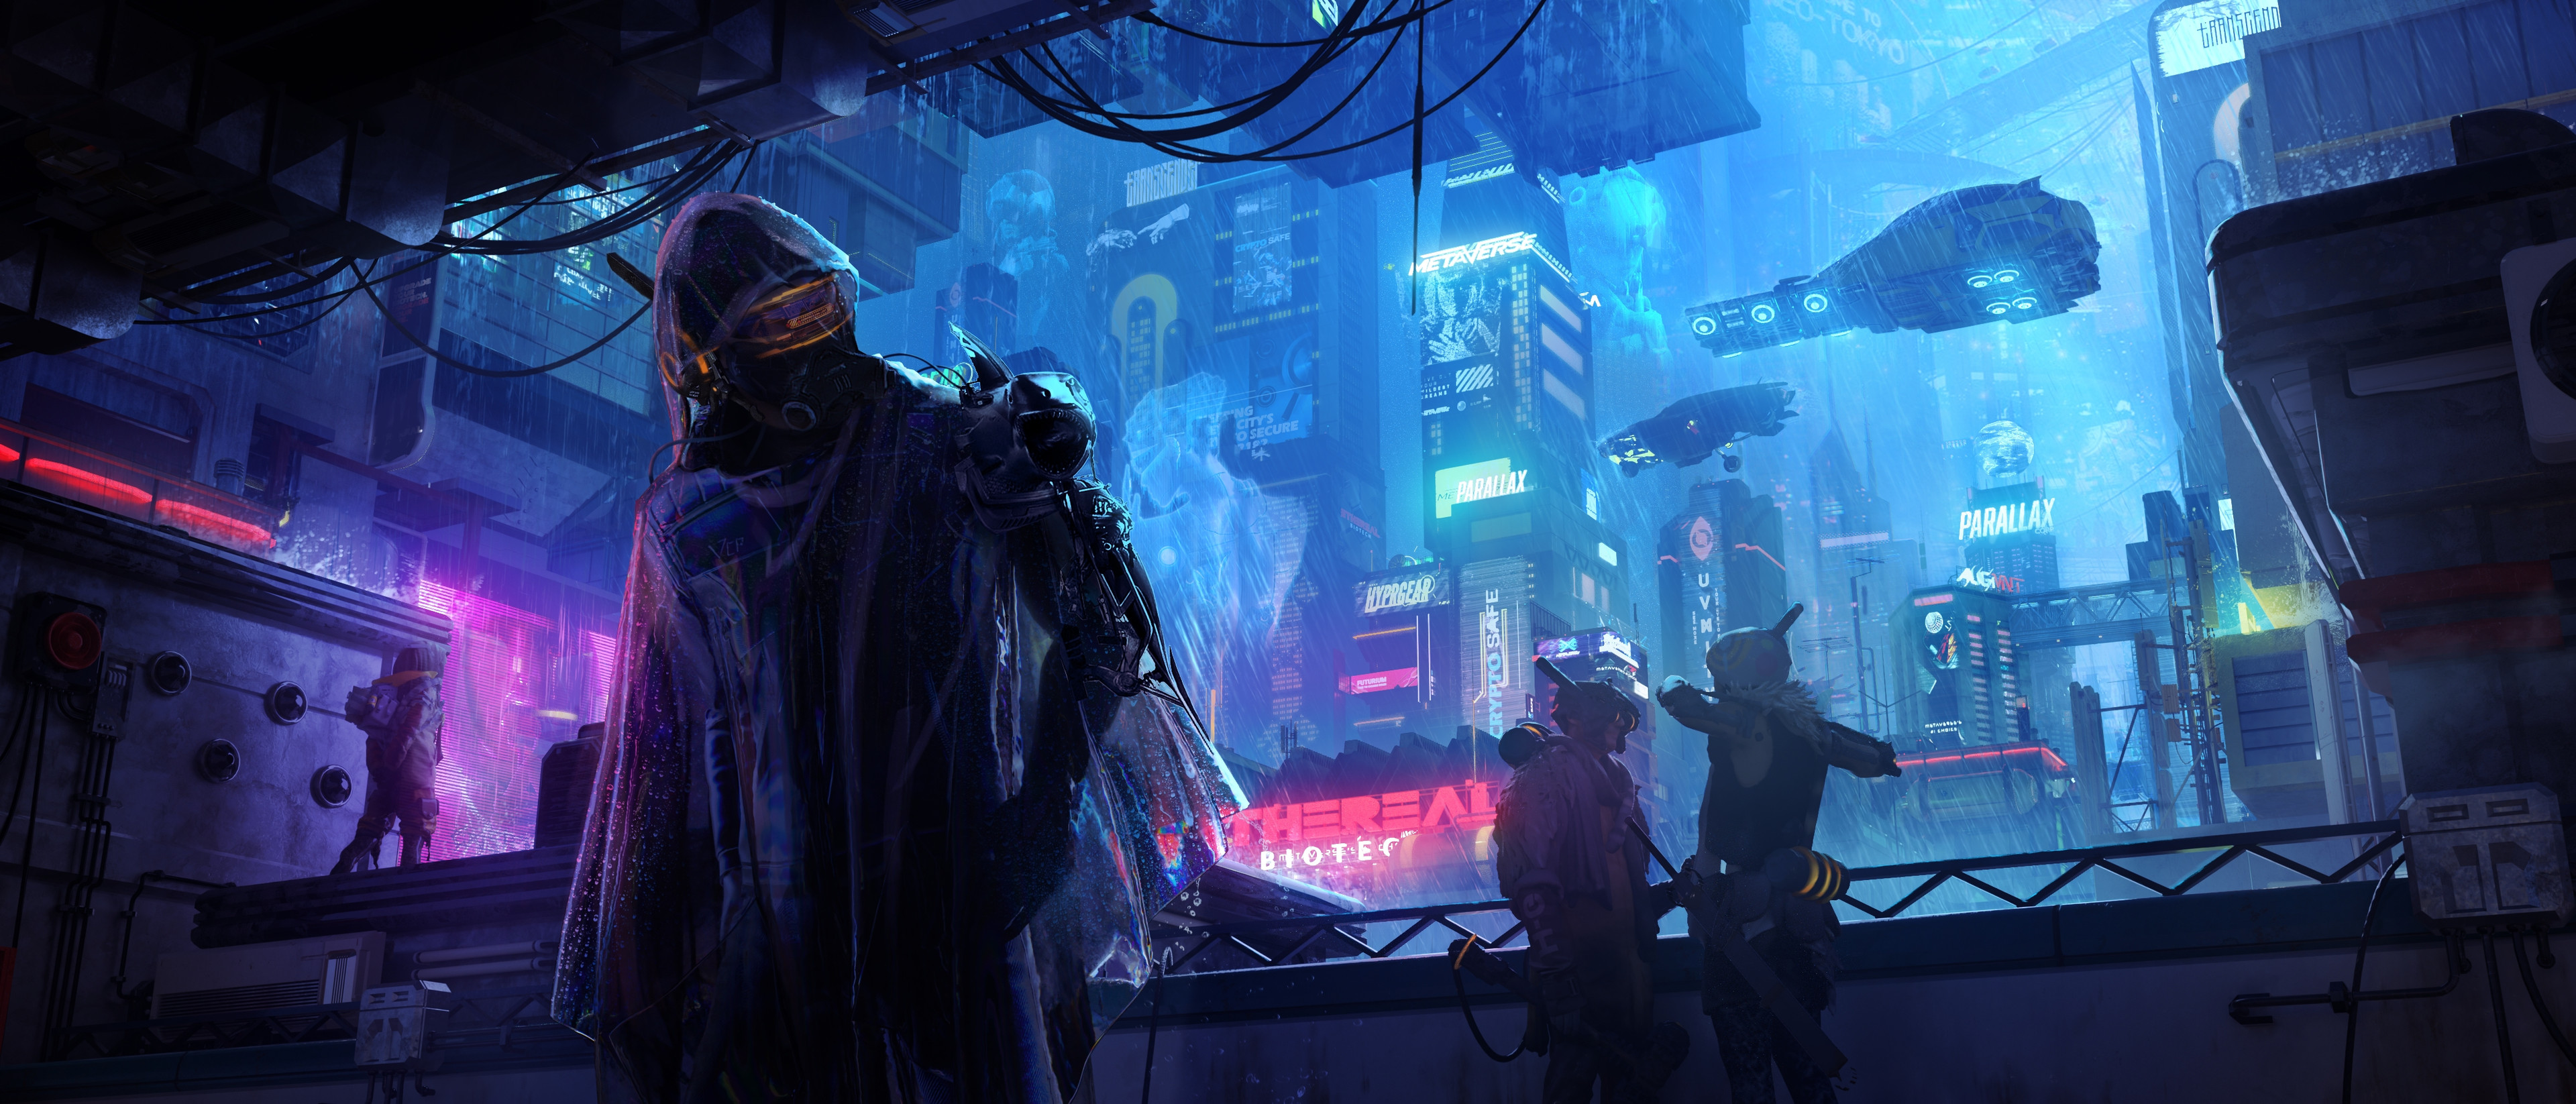 Cyberpunk City, Huanfeng Qu : r/ImaginaryCyberpunk